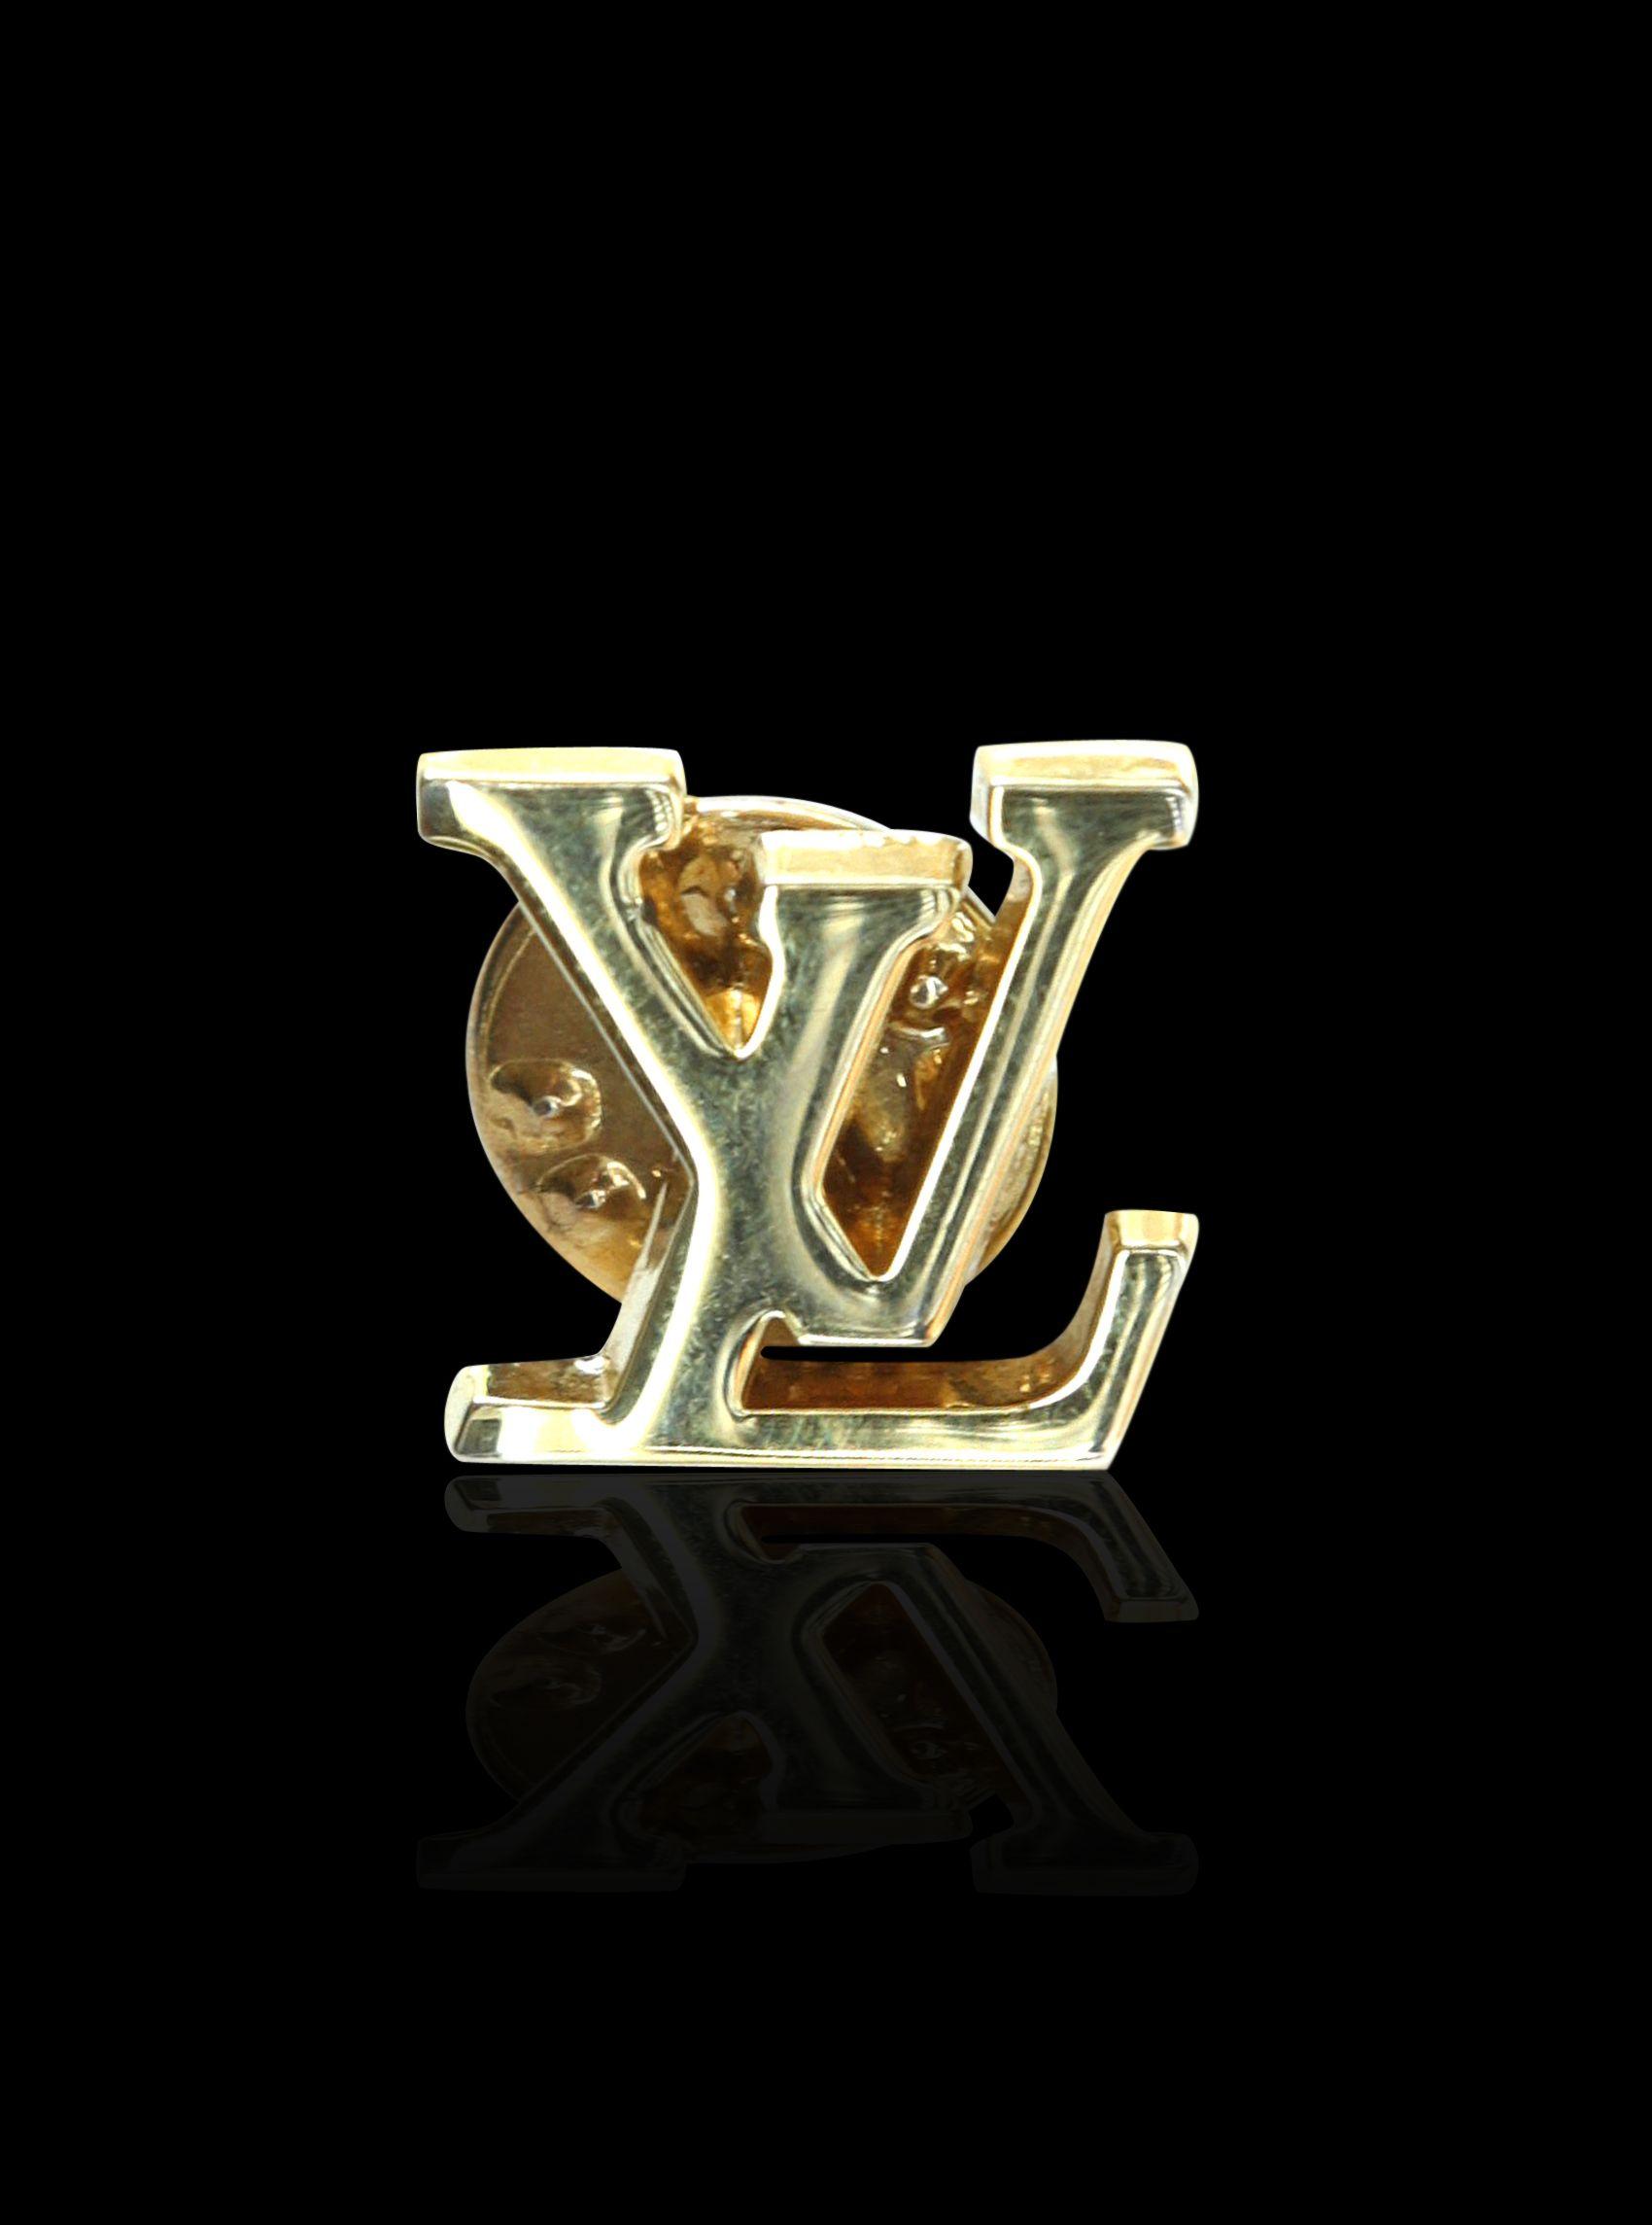 LV Gold Logo - LOUIS VUITTON GOLD BROOCH PIN 1CM x 1CM - The Brooch Club